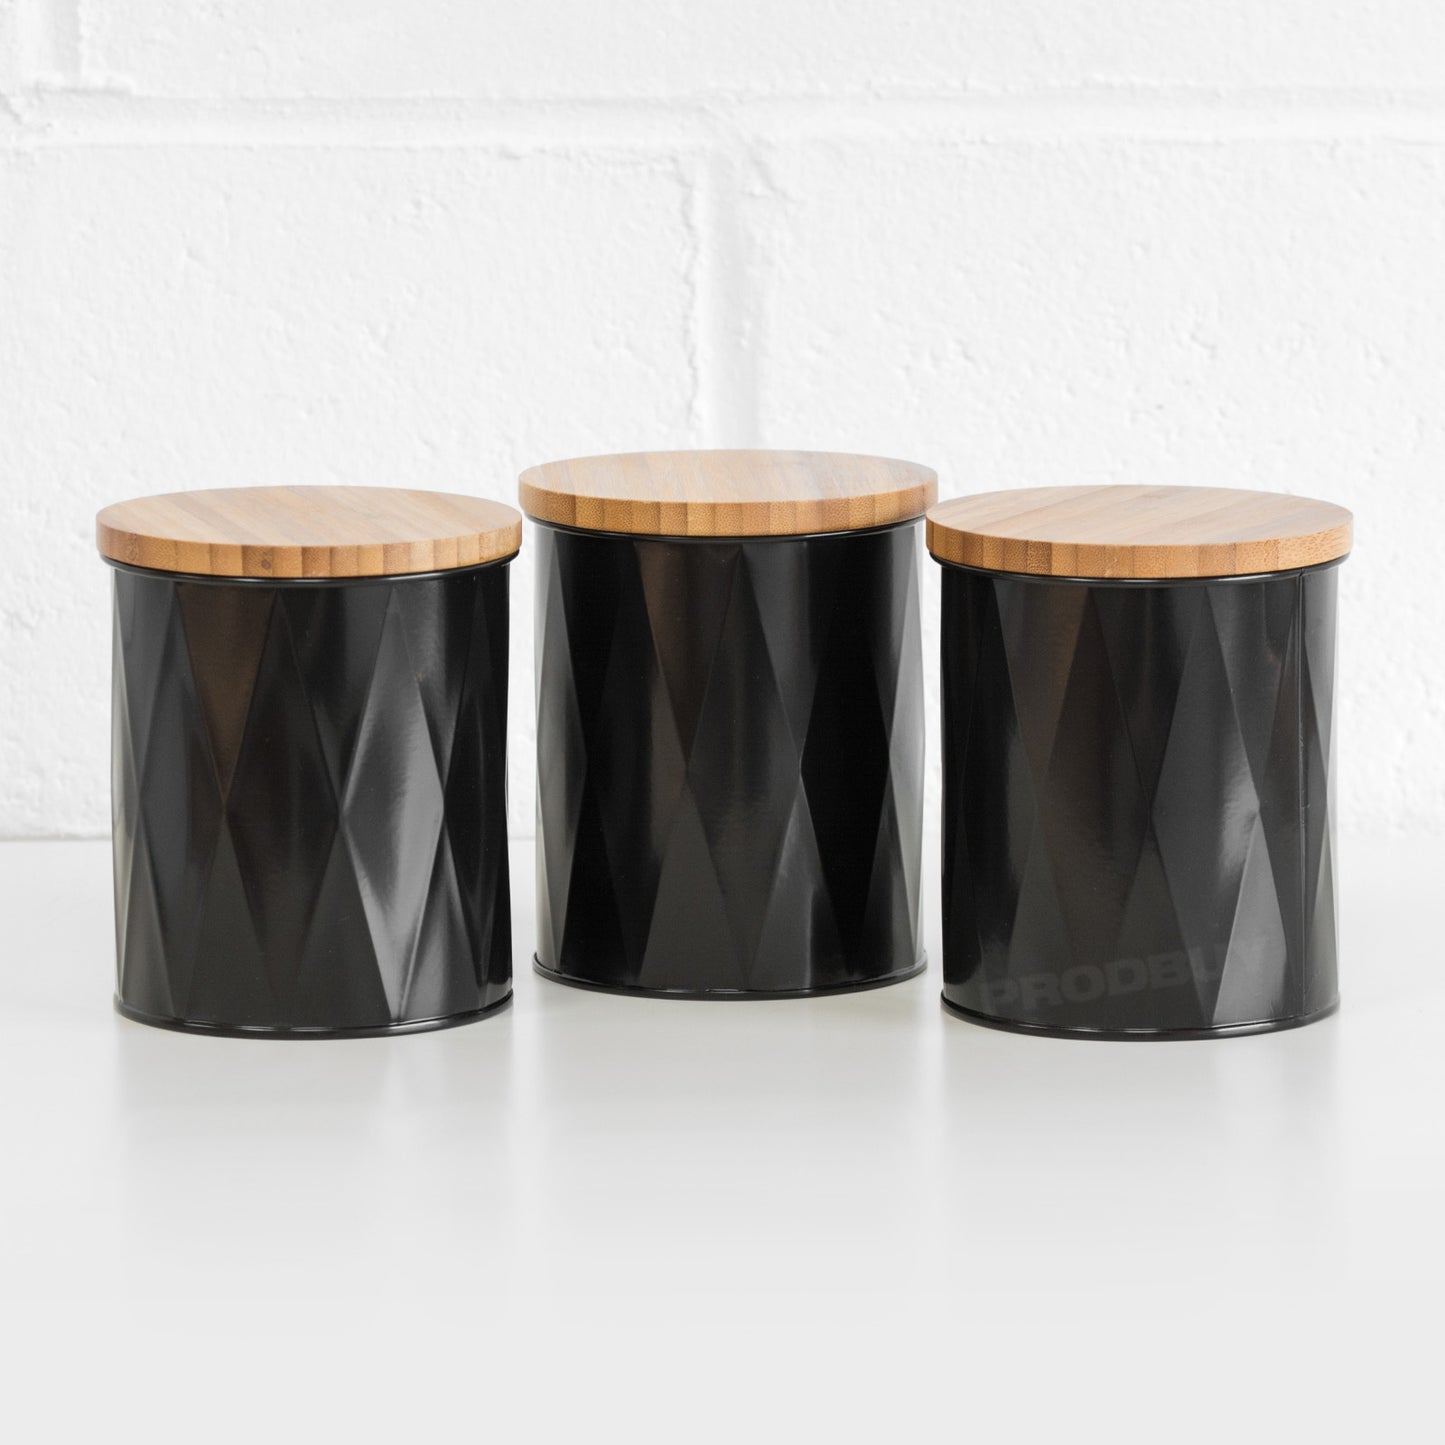 Set of 3 Black Geometric Kitchen Storage Canisters